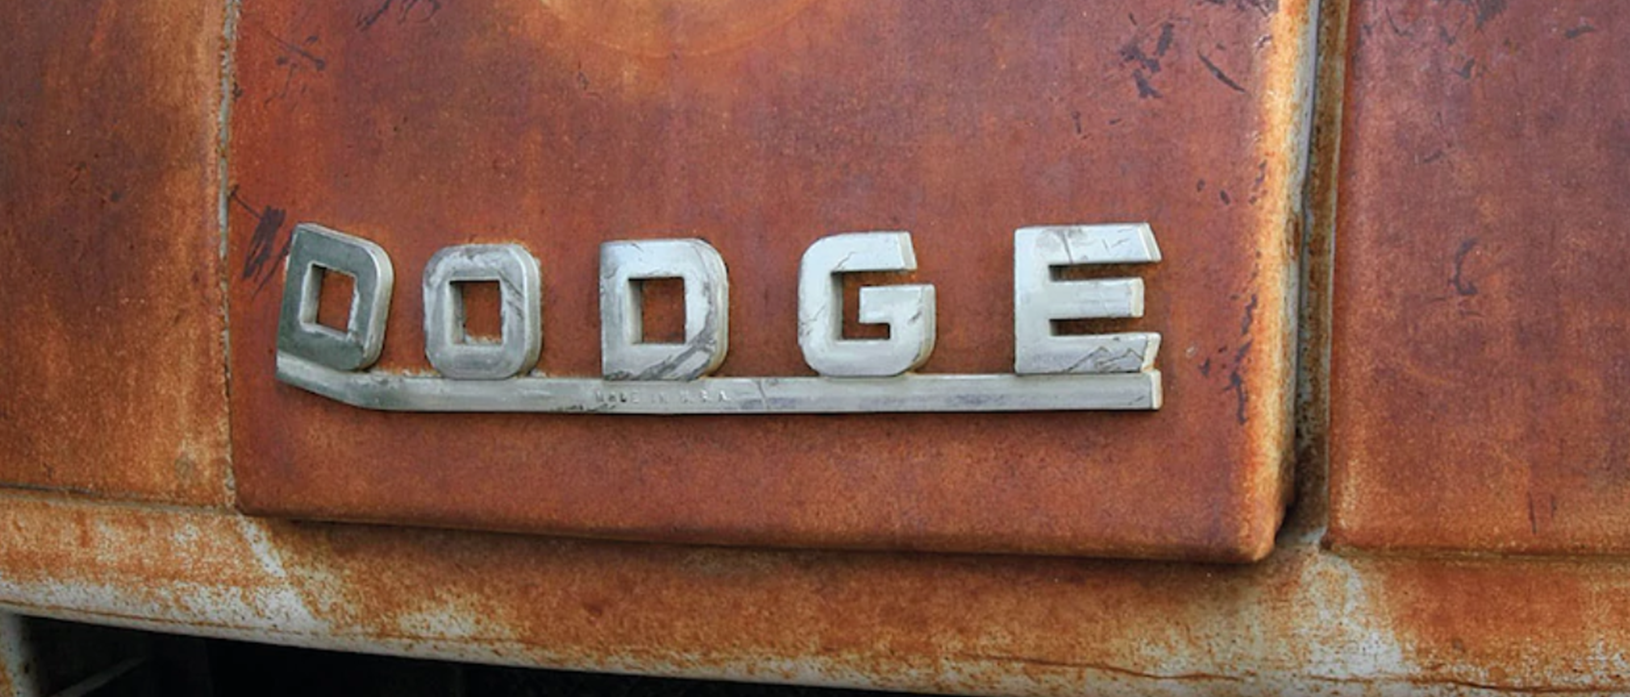 DIY Dodge